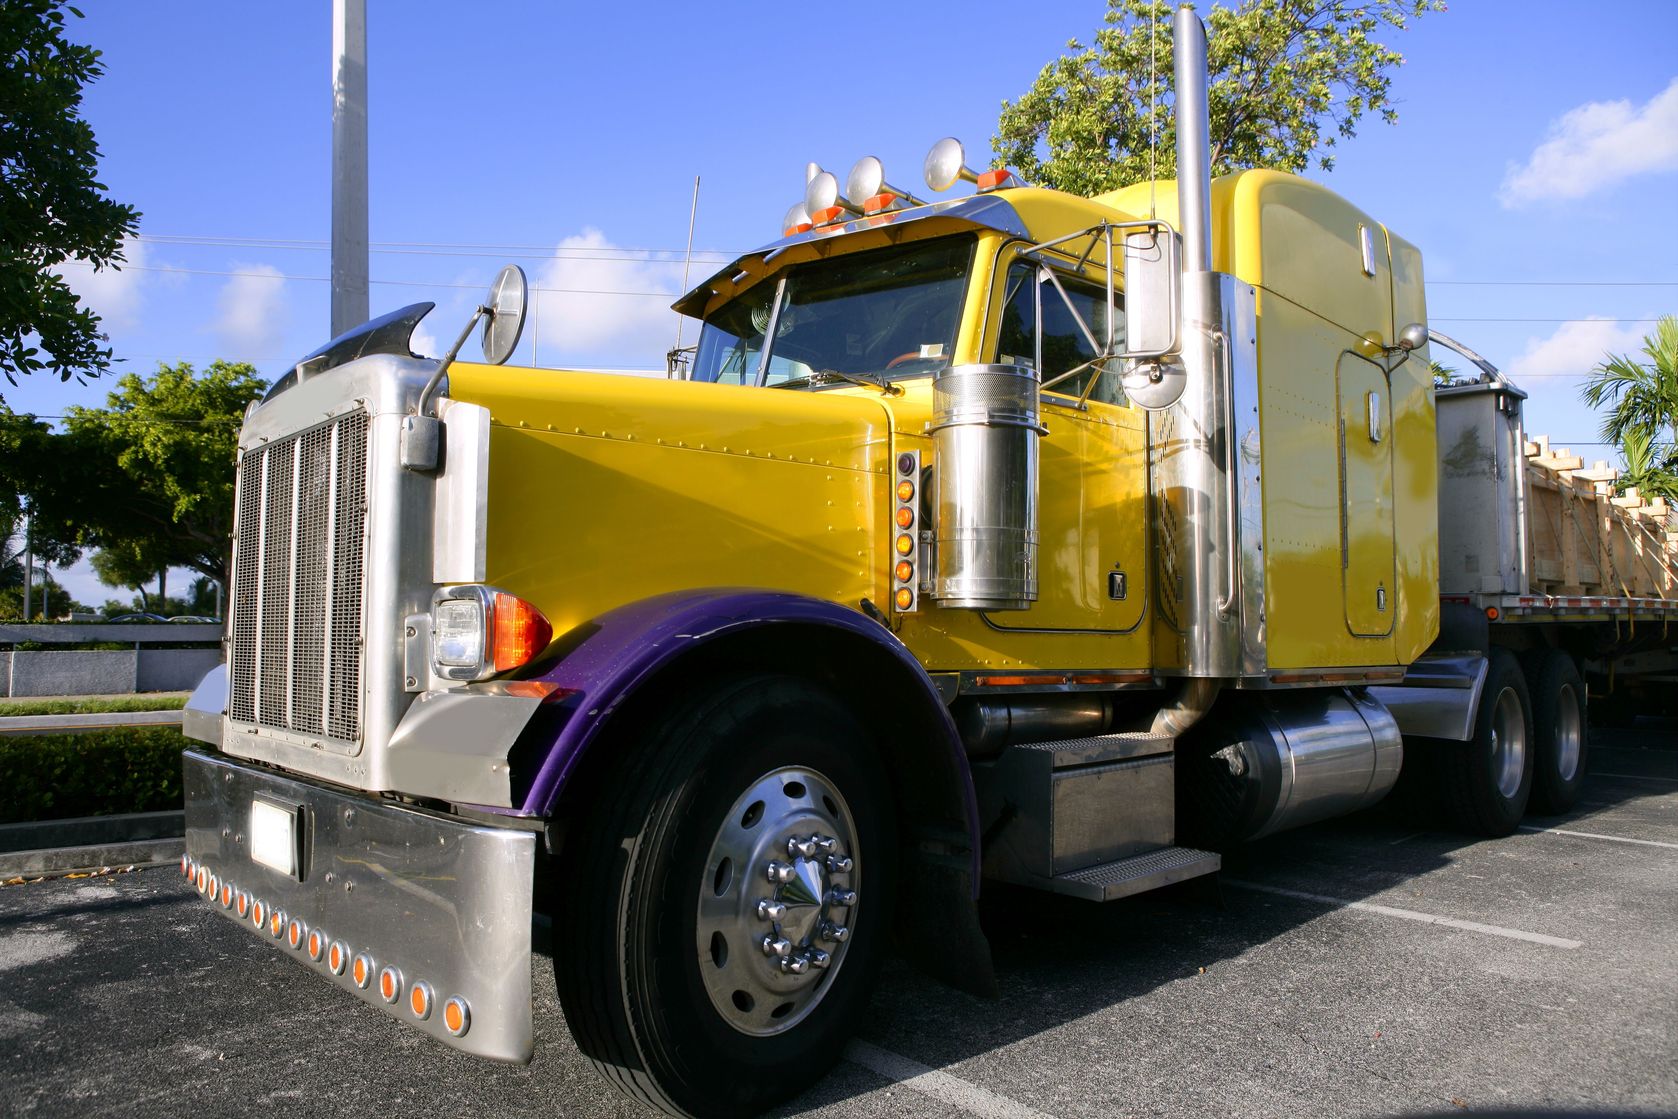 San Diego, Encinitas, CA. Truck Liability Insurance